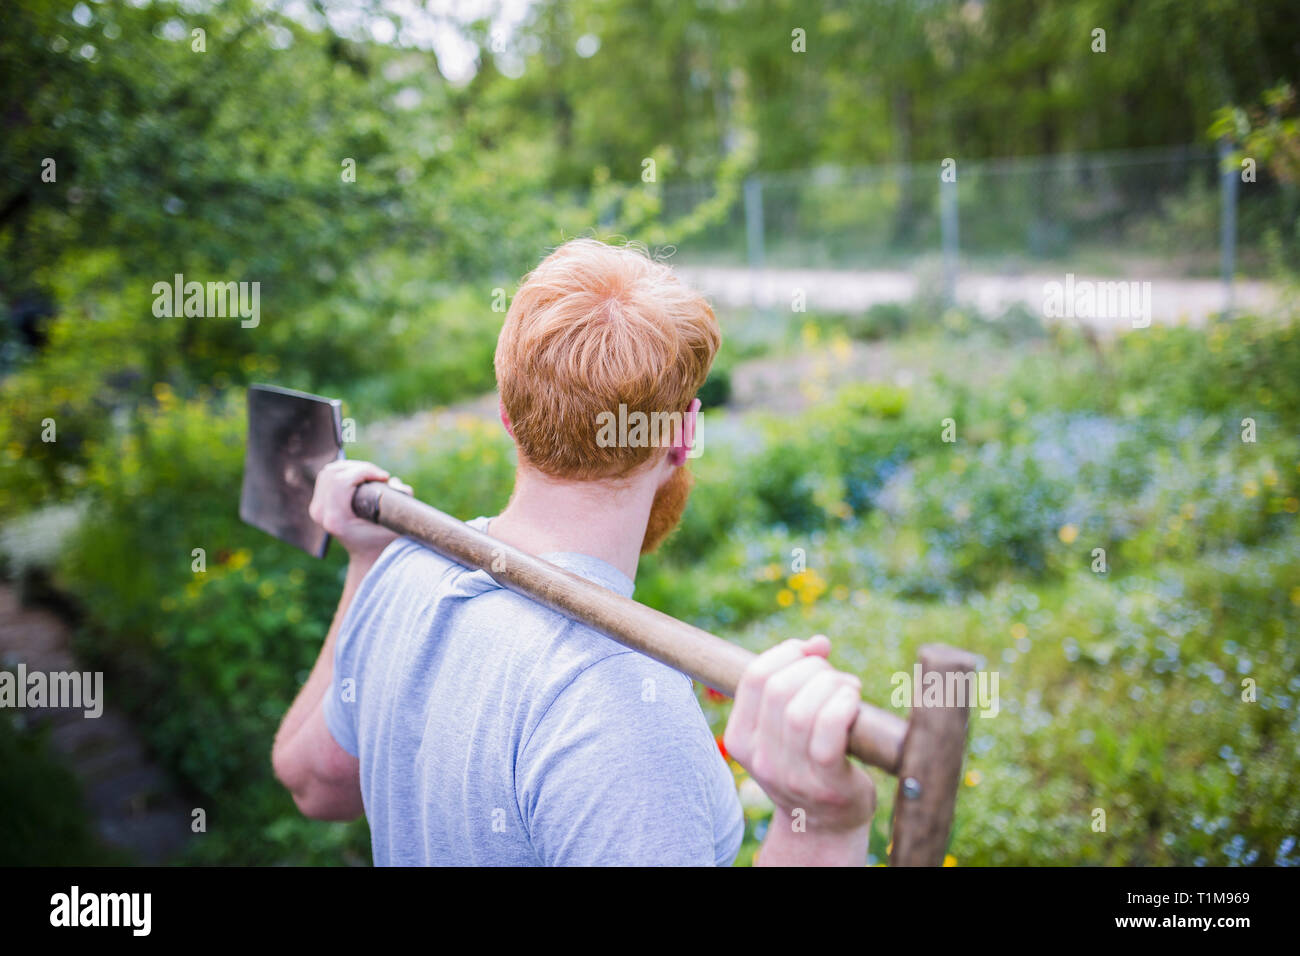 Man with shovel in garden Stock Photo